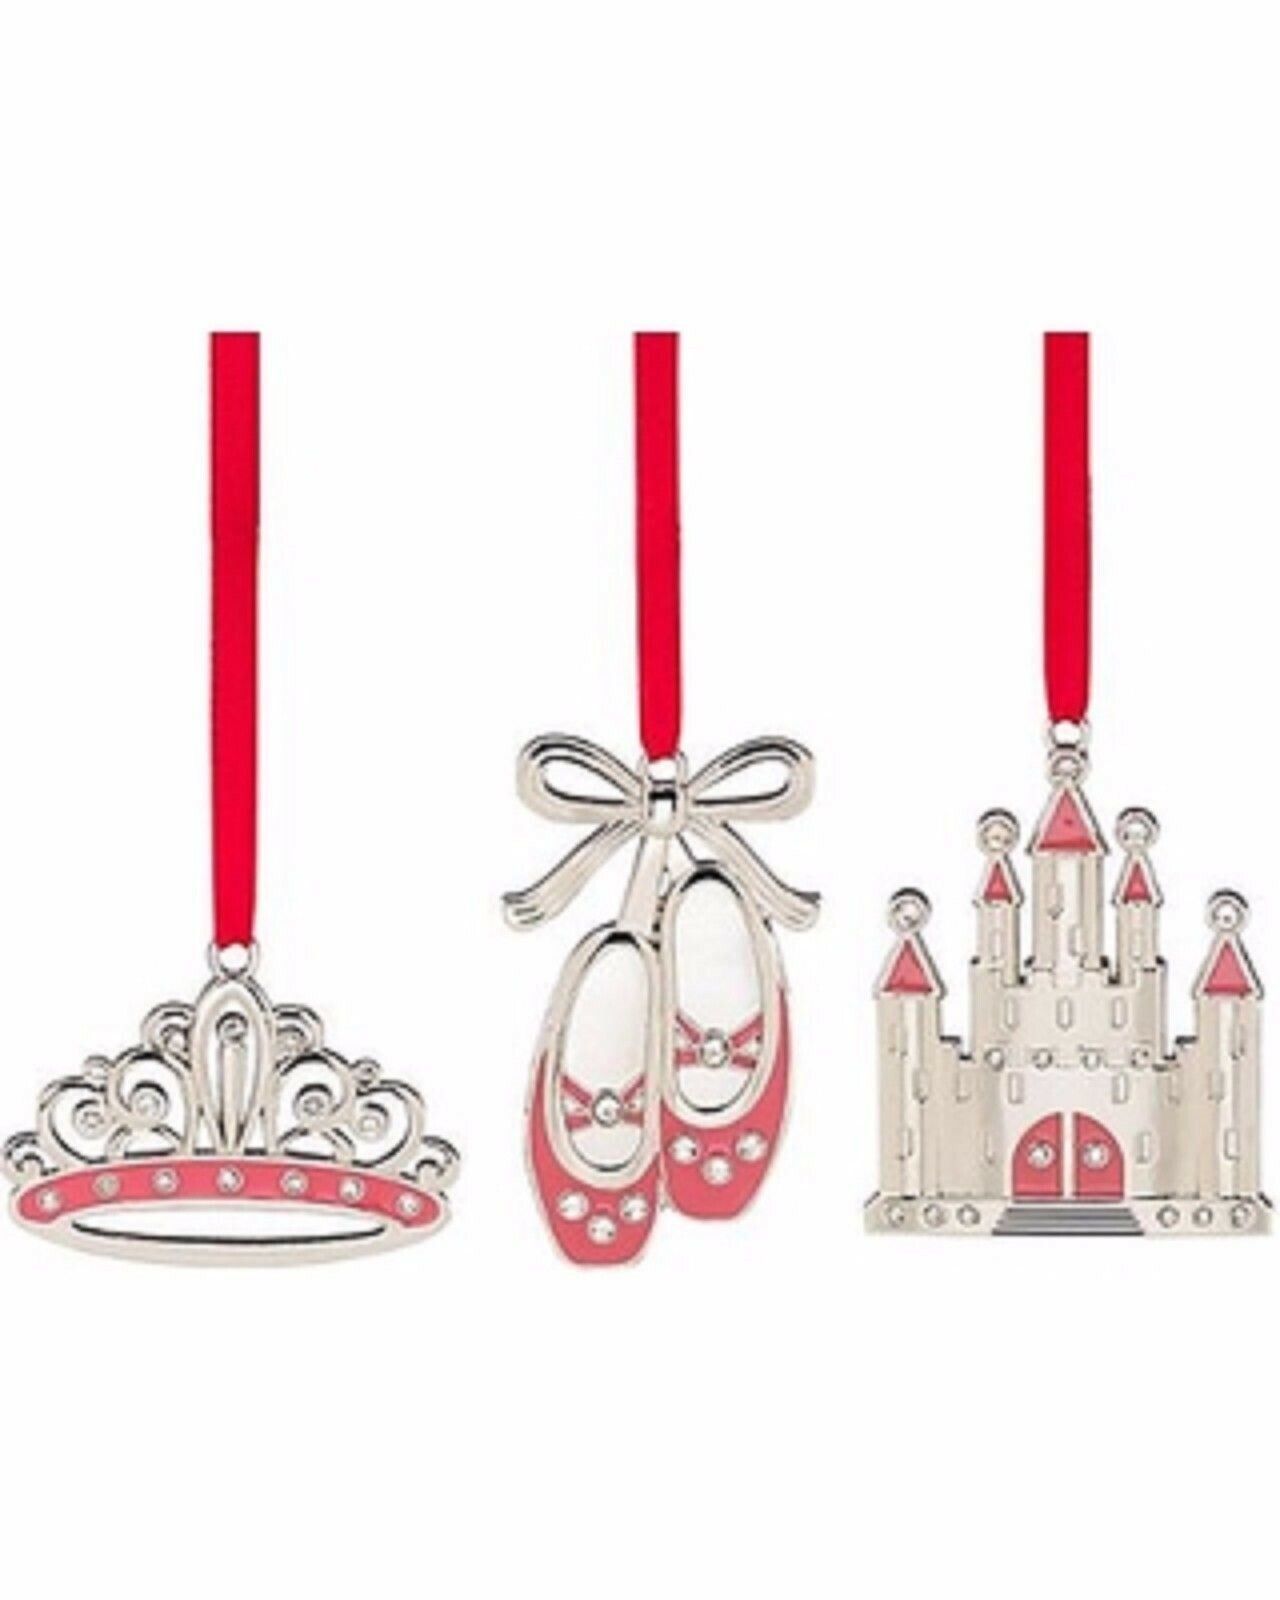 Lenox Jeweled Silver Princess Ornament Set 3 Tiara Slippers Castle Christmas NEW - $12.00